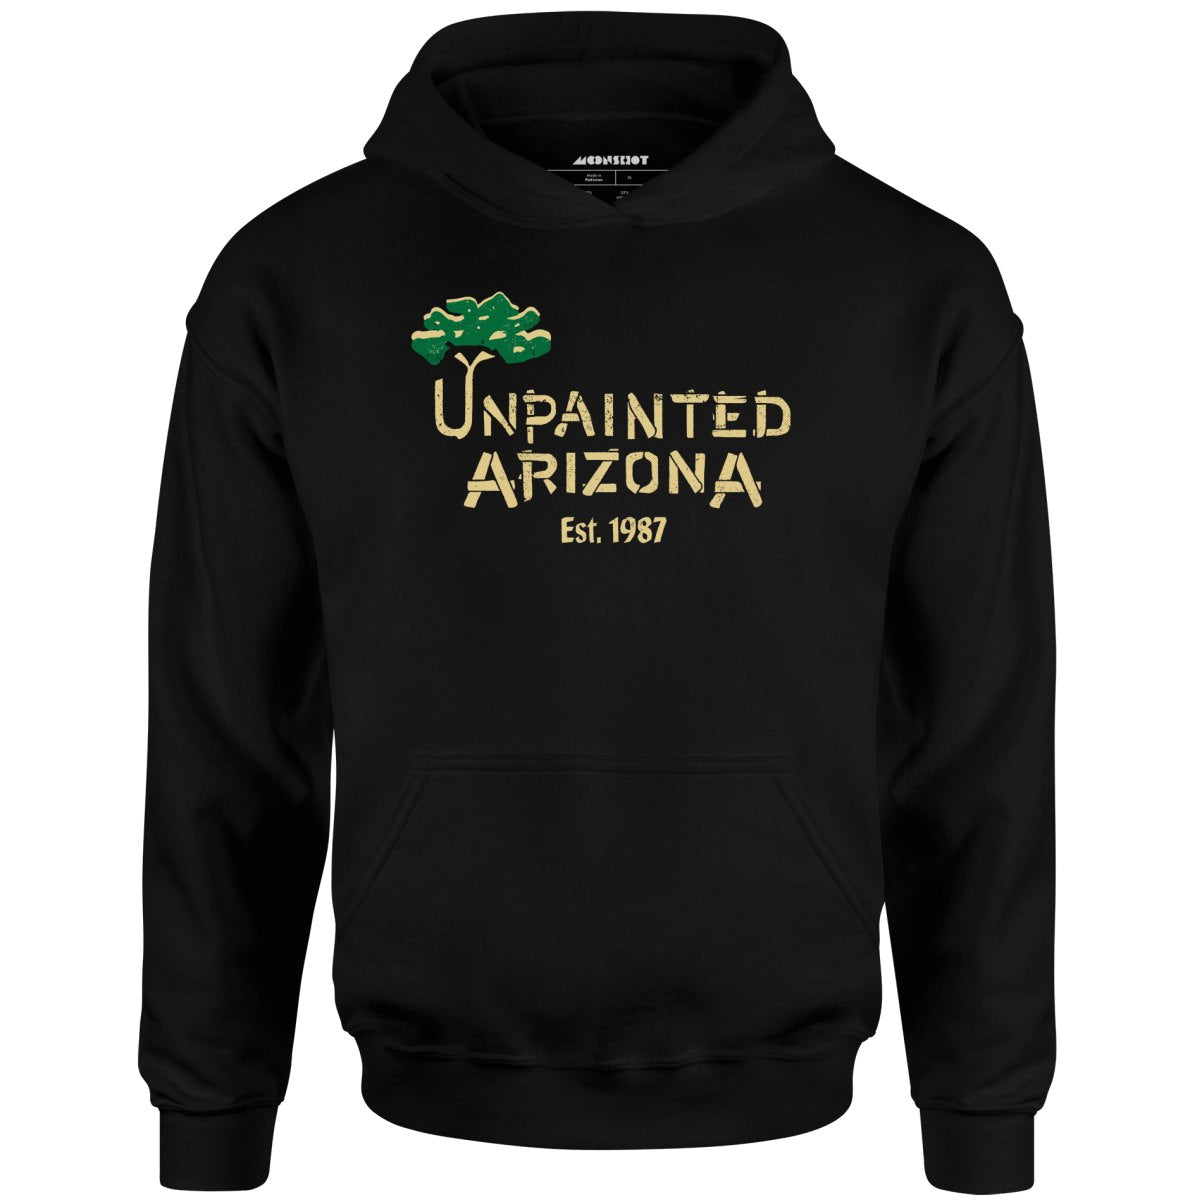 Unpainted Arizona - Unisex Hoodie